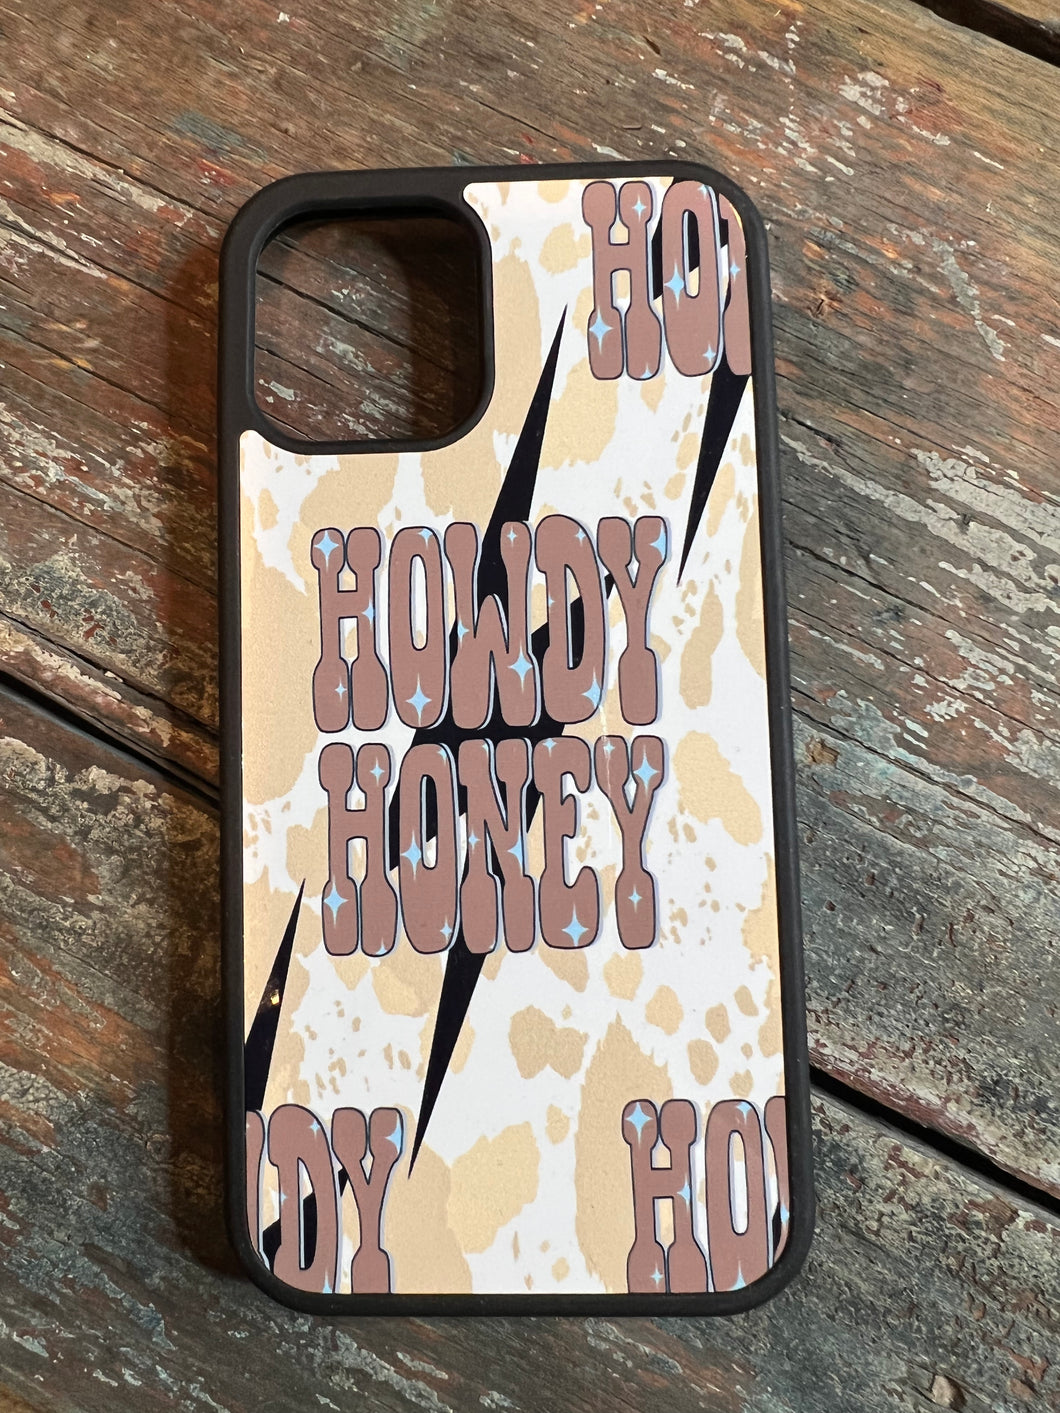 Howdy honey phone case 12 or 12 pro